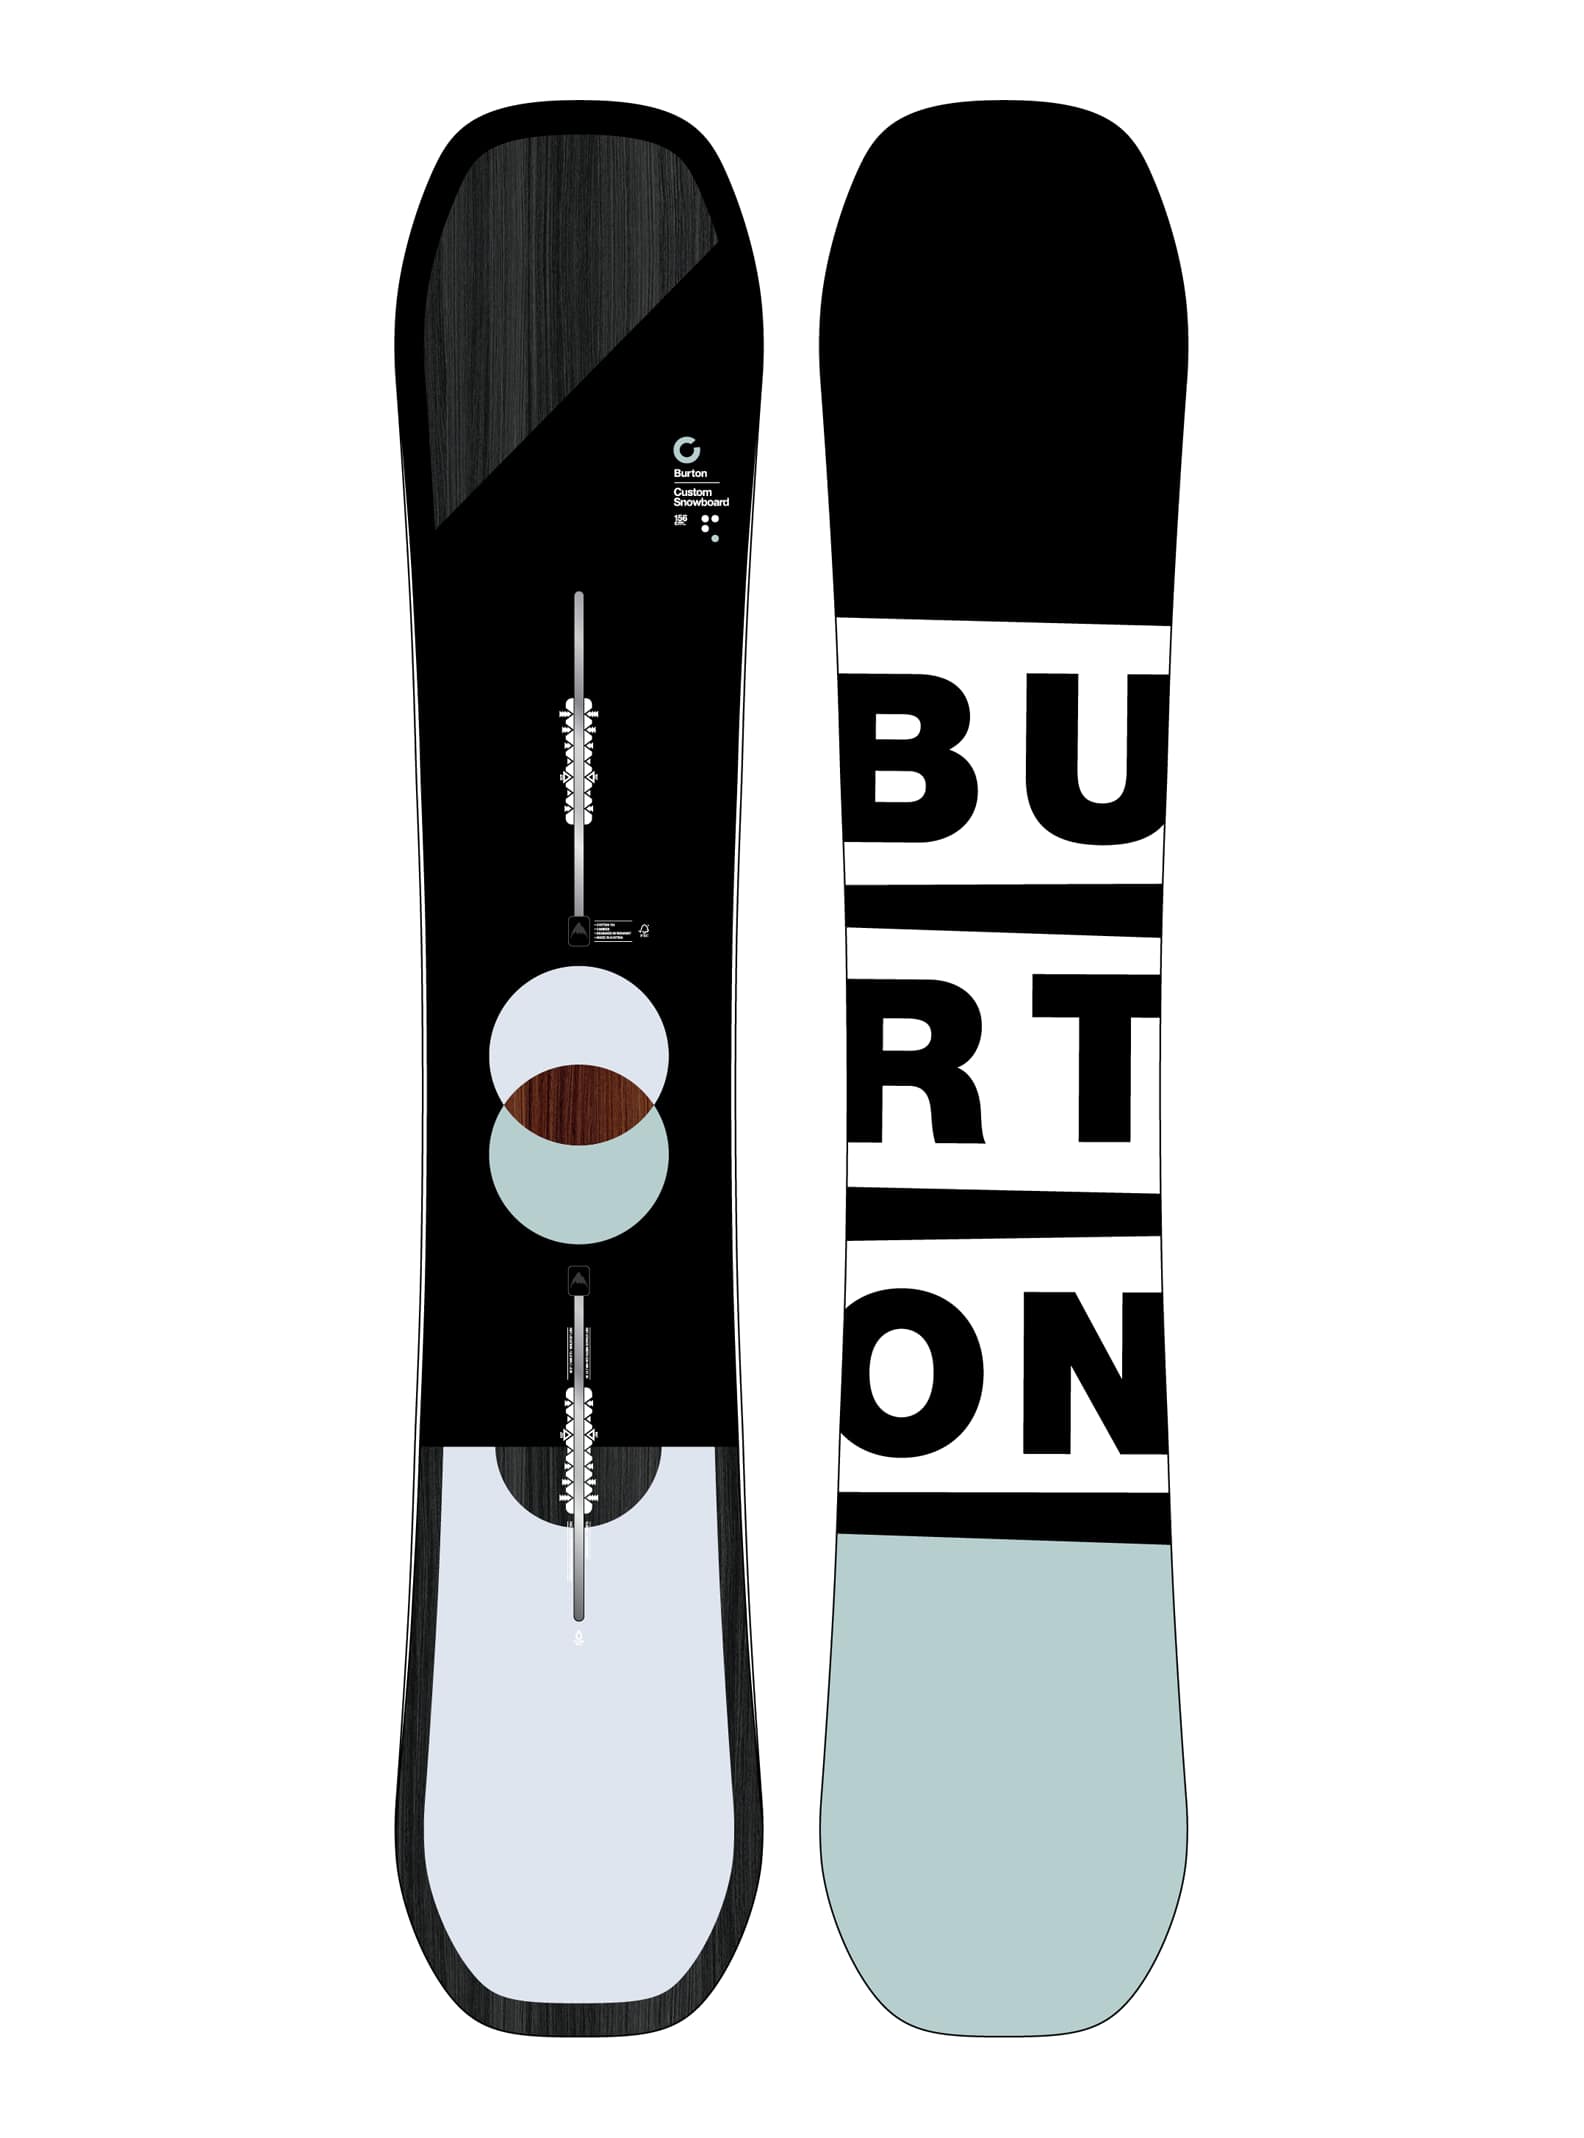 Men's Burton Custom Camber Snowboard | Burton.com Winter 2020 US